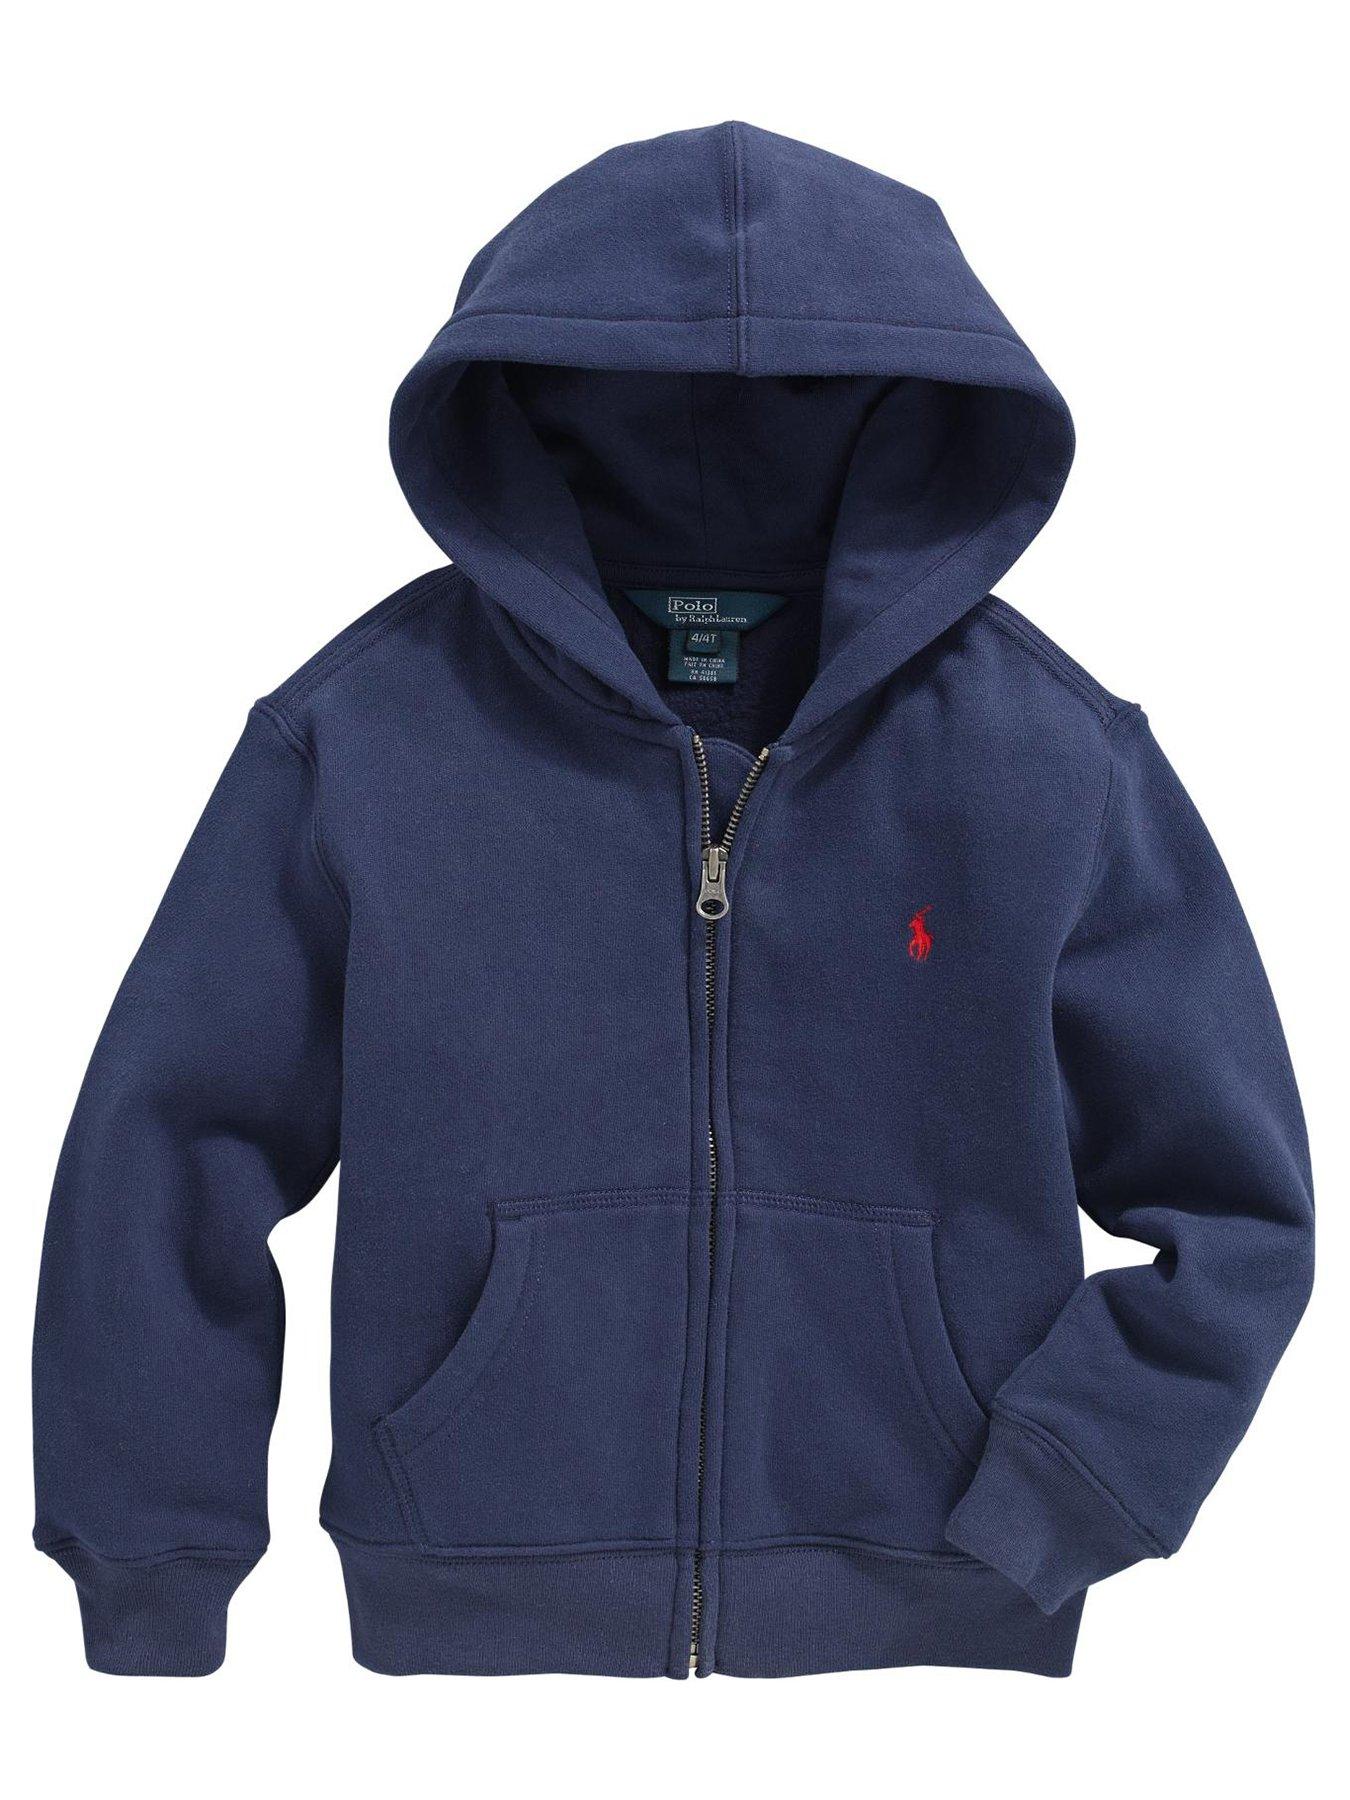 KIDS FASHION Jumpers & Sweatshirts Zip Gray/Navy Blue 1-3M Ralph Lauren sweatshirt discount 73% 